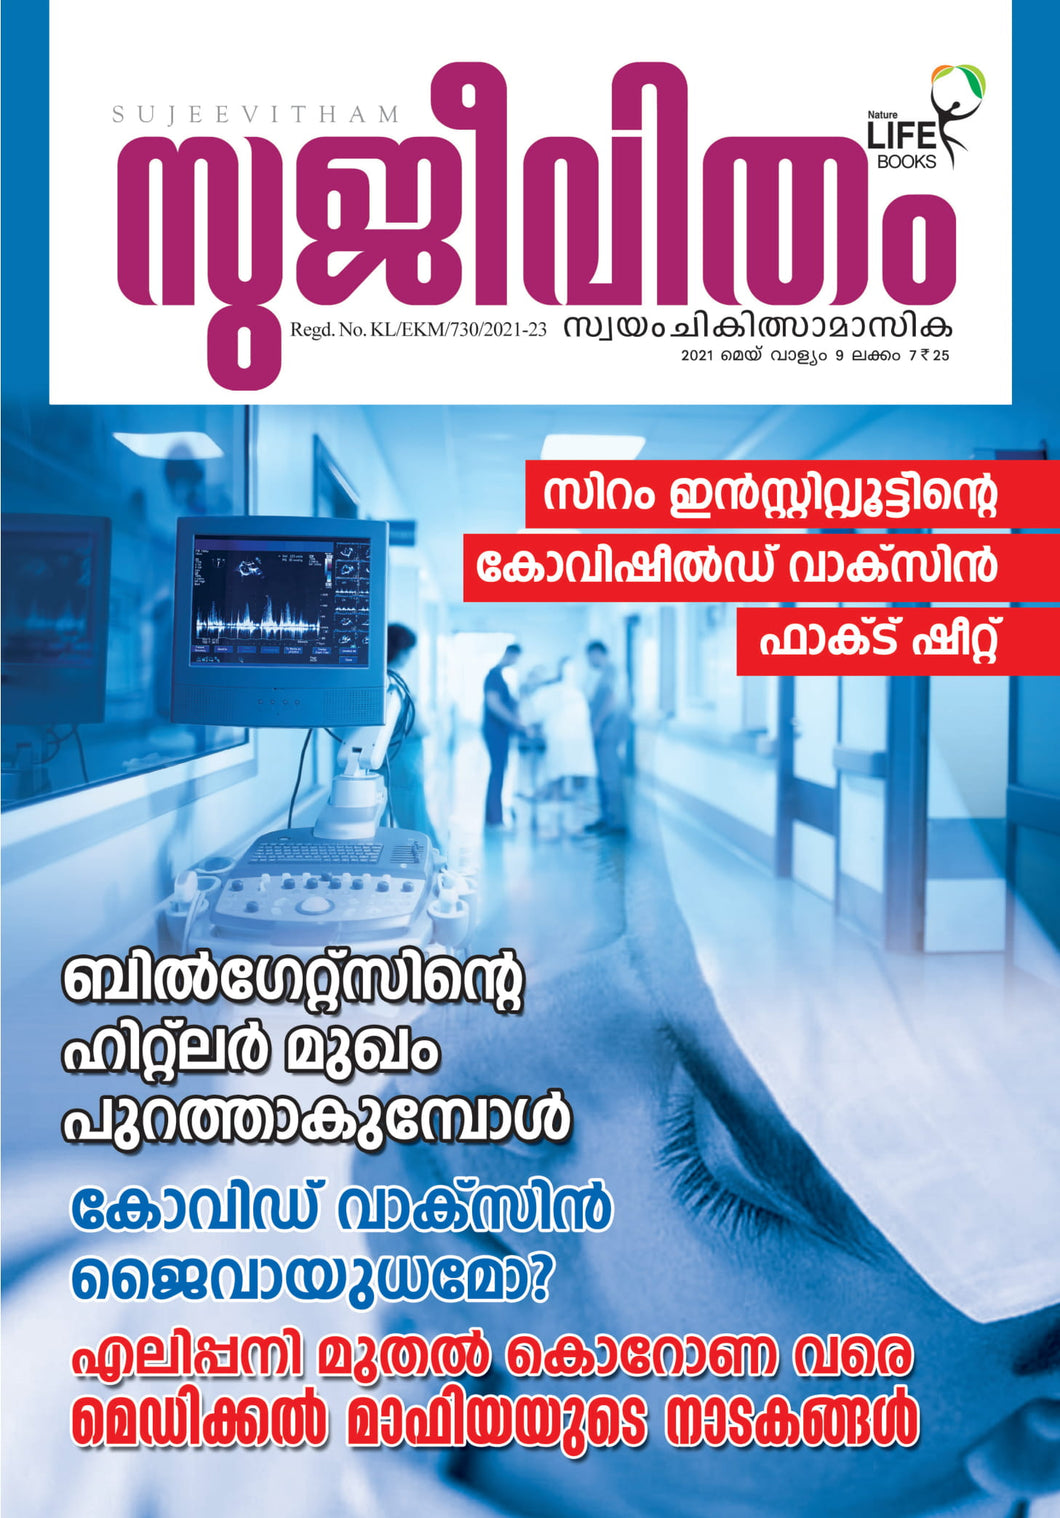 Sujeevitham Magazine May 2021 (Digital Edition)